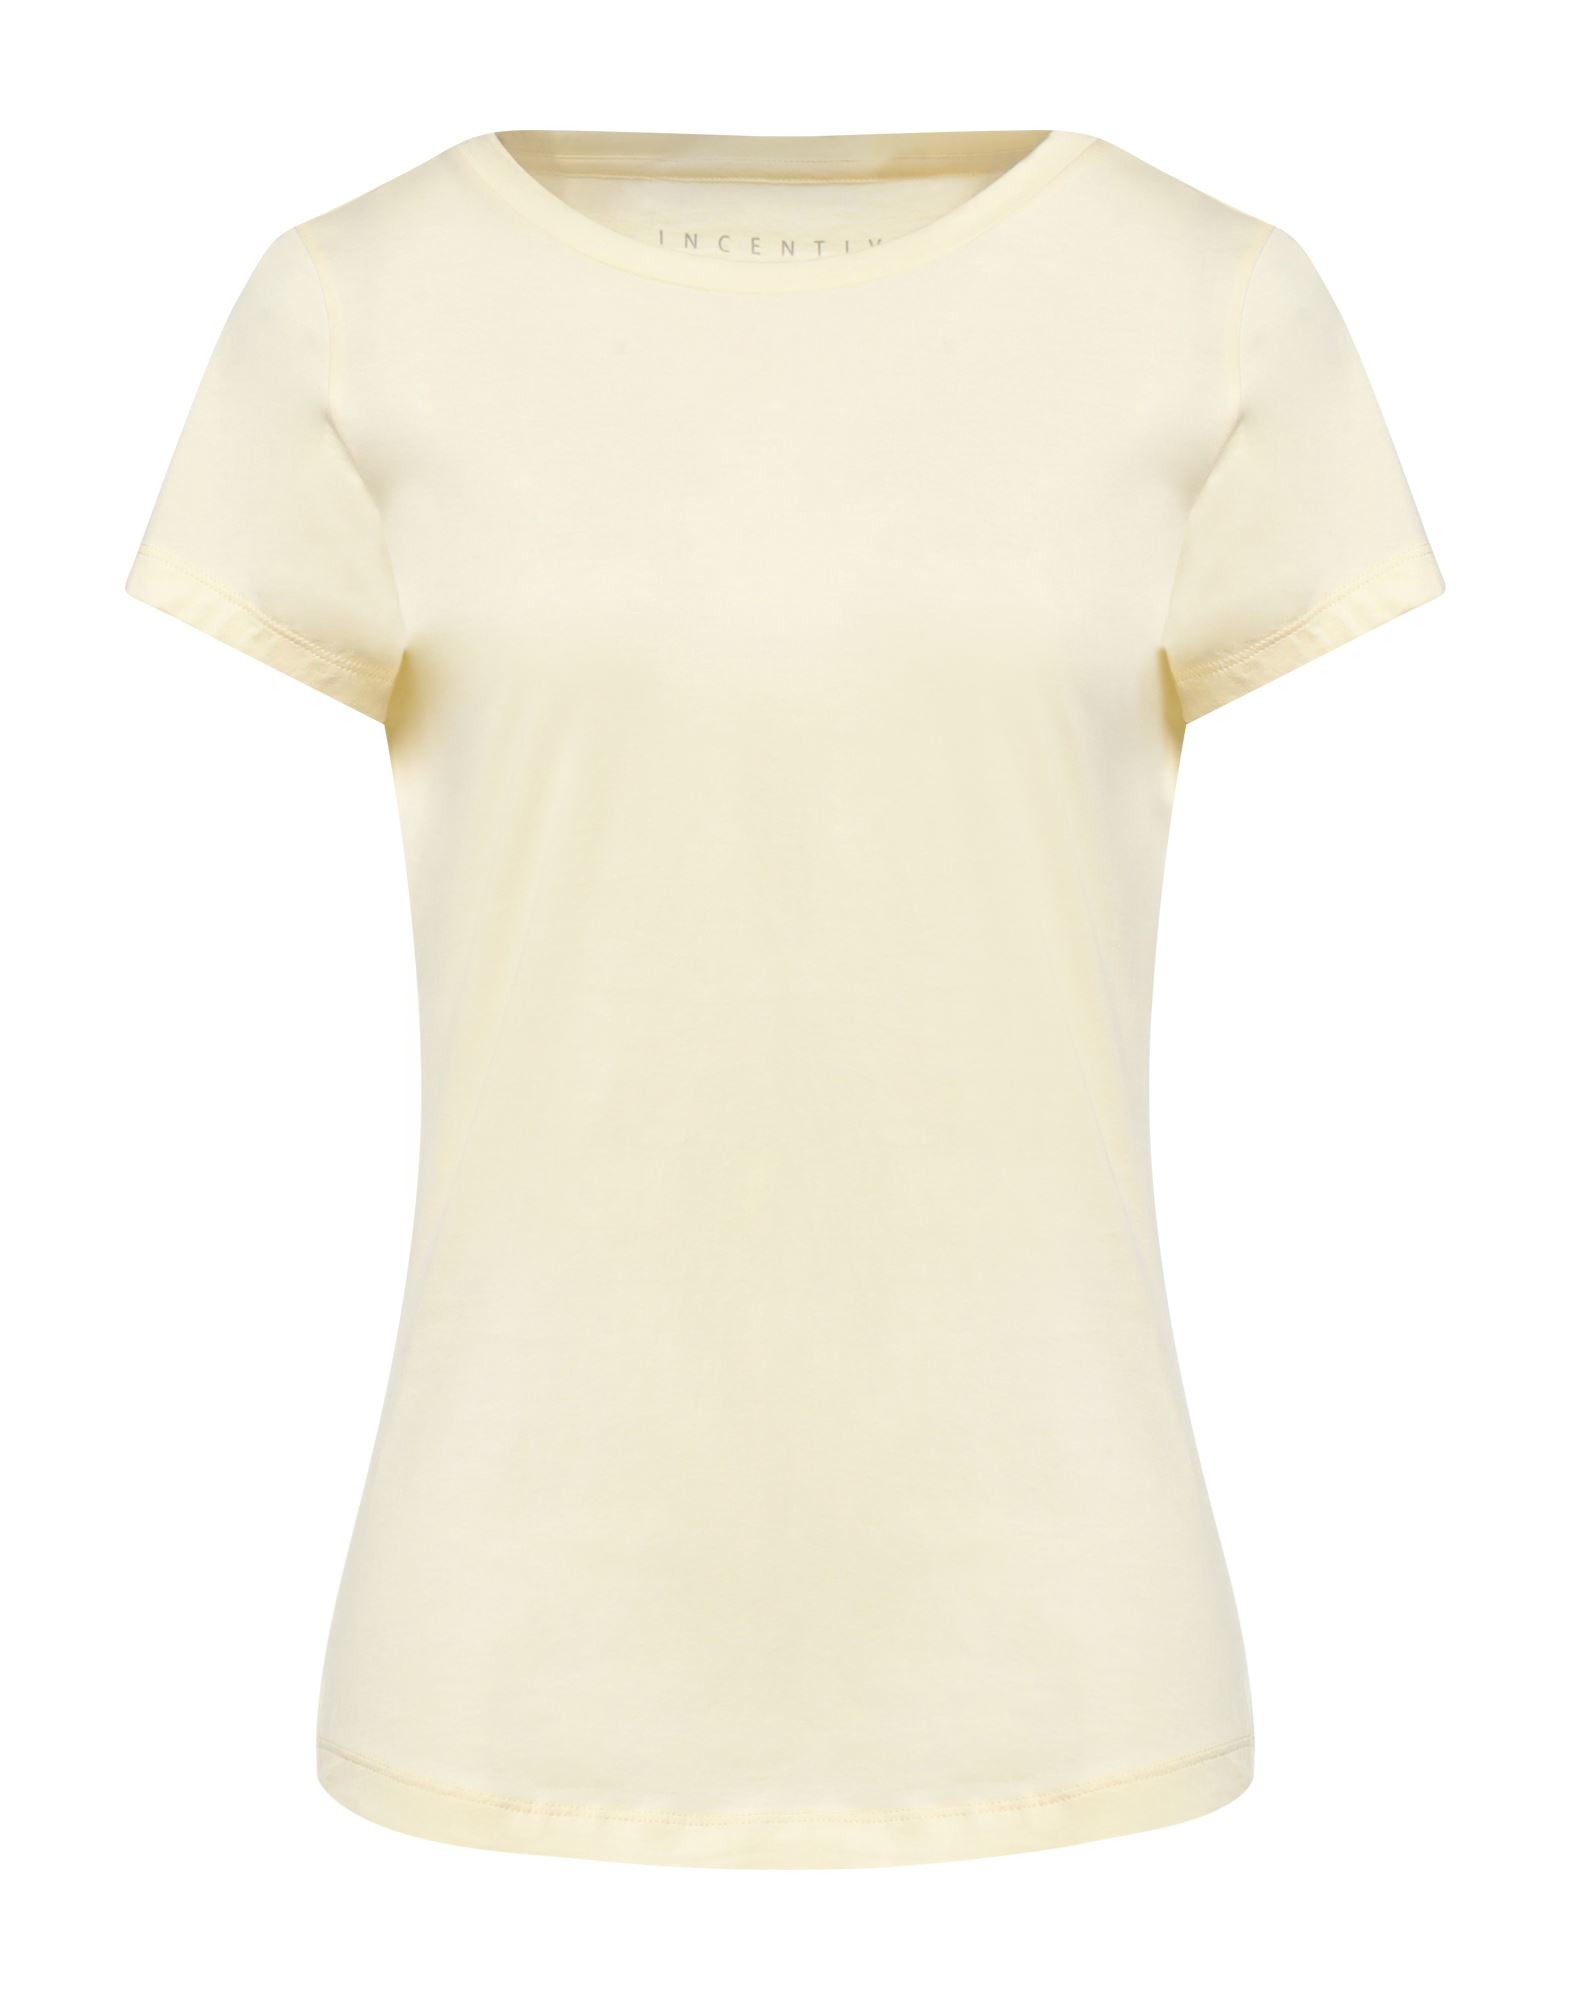 Incentive! Woman T-shirt Light Yellow Size Xl Organic Cotton